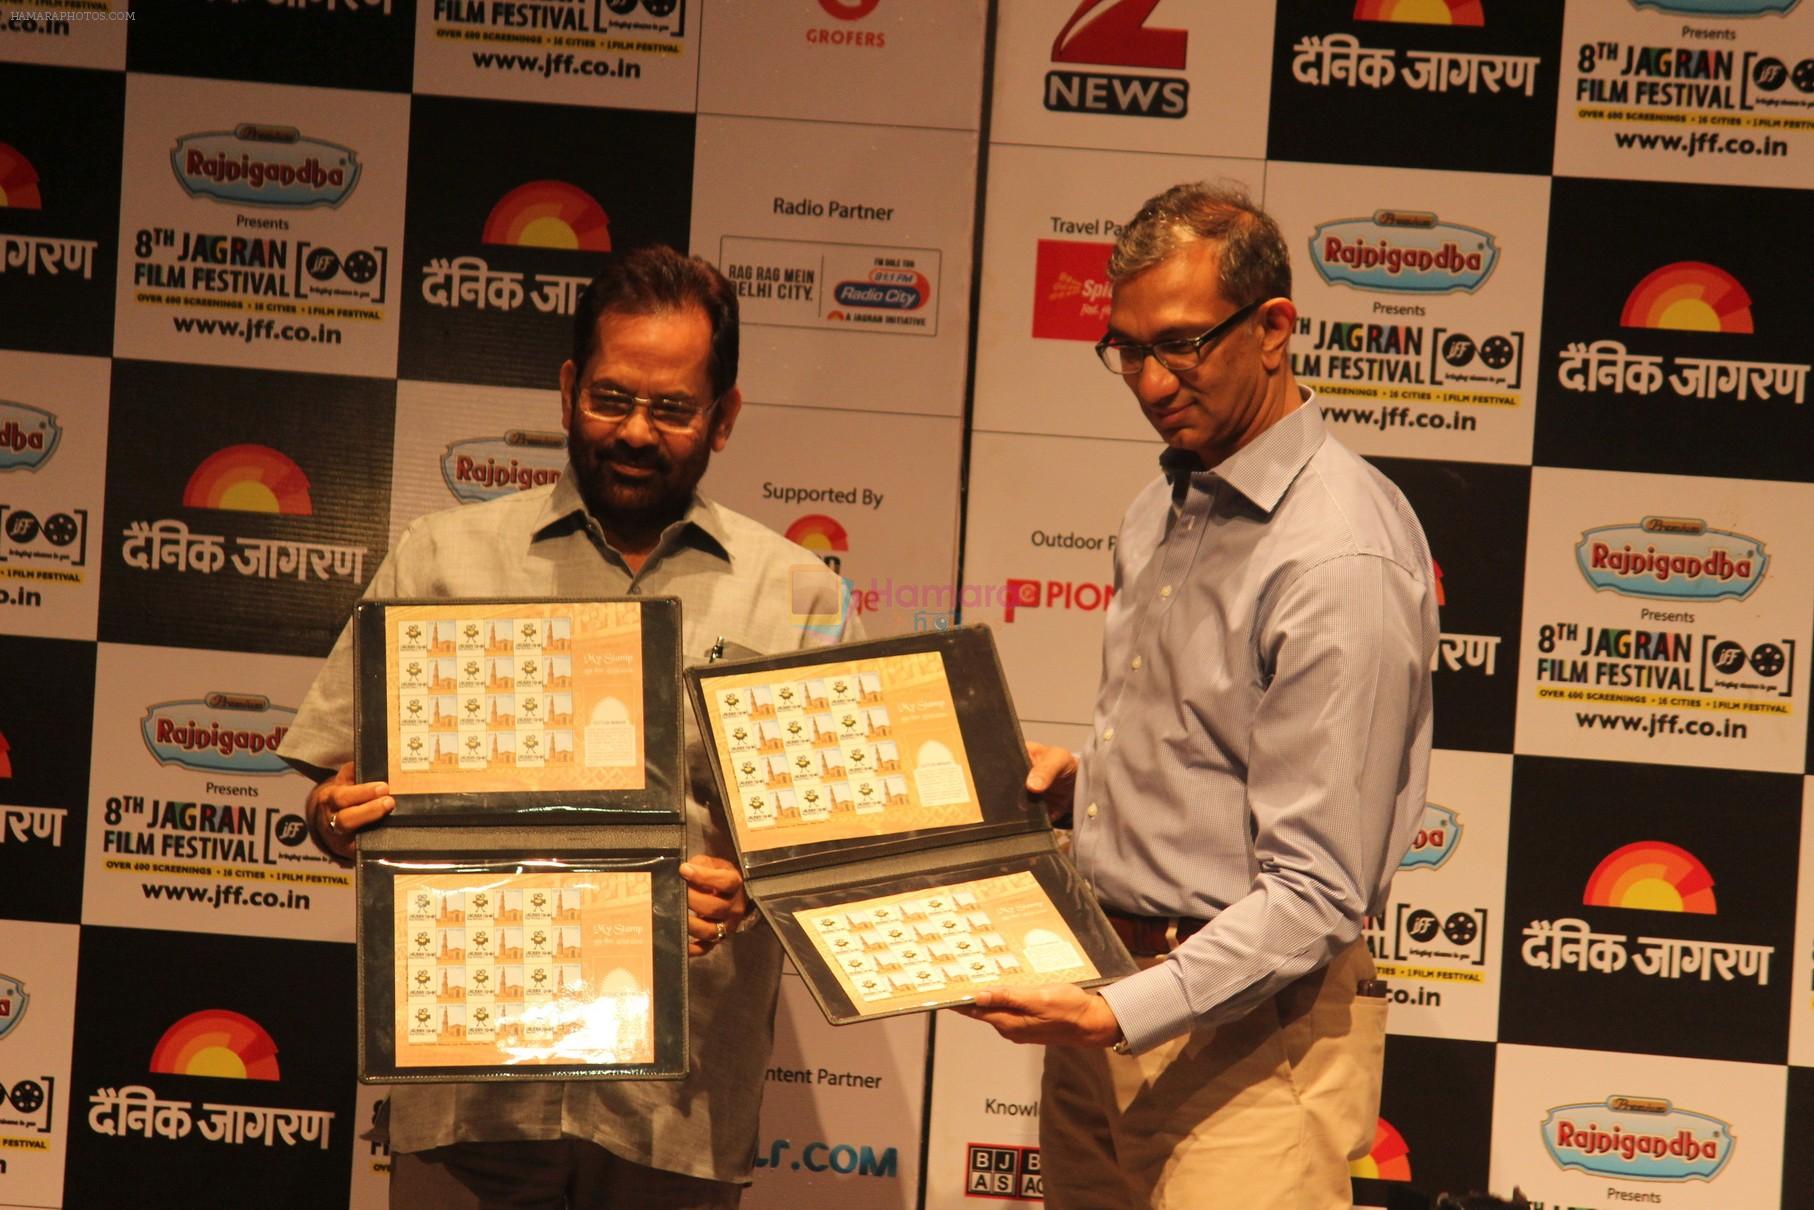 Mukhtar Abbas Naqvi and Sanjay Gupta at 8th Jagran Film Festival in Delhi on 1st July 2017